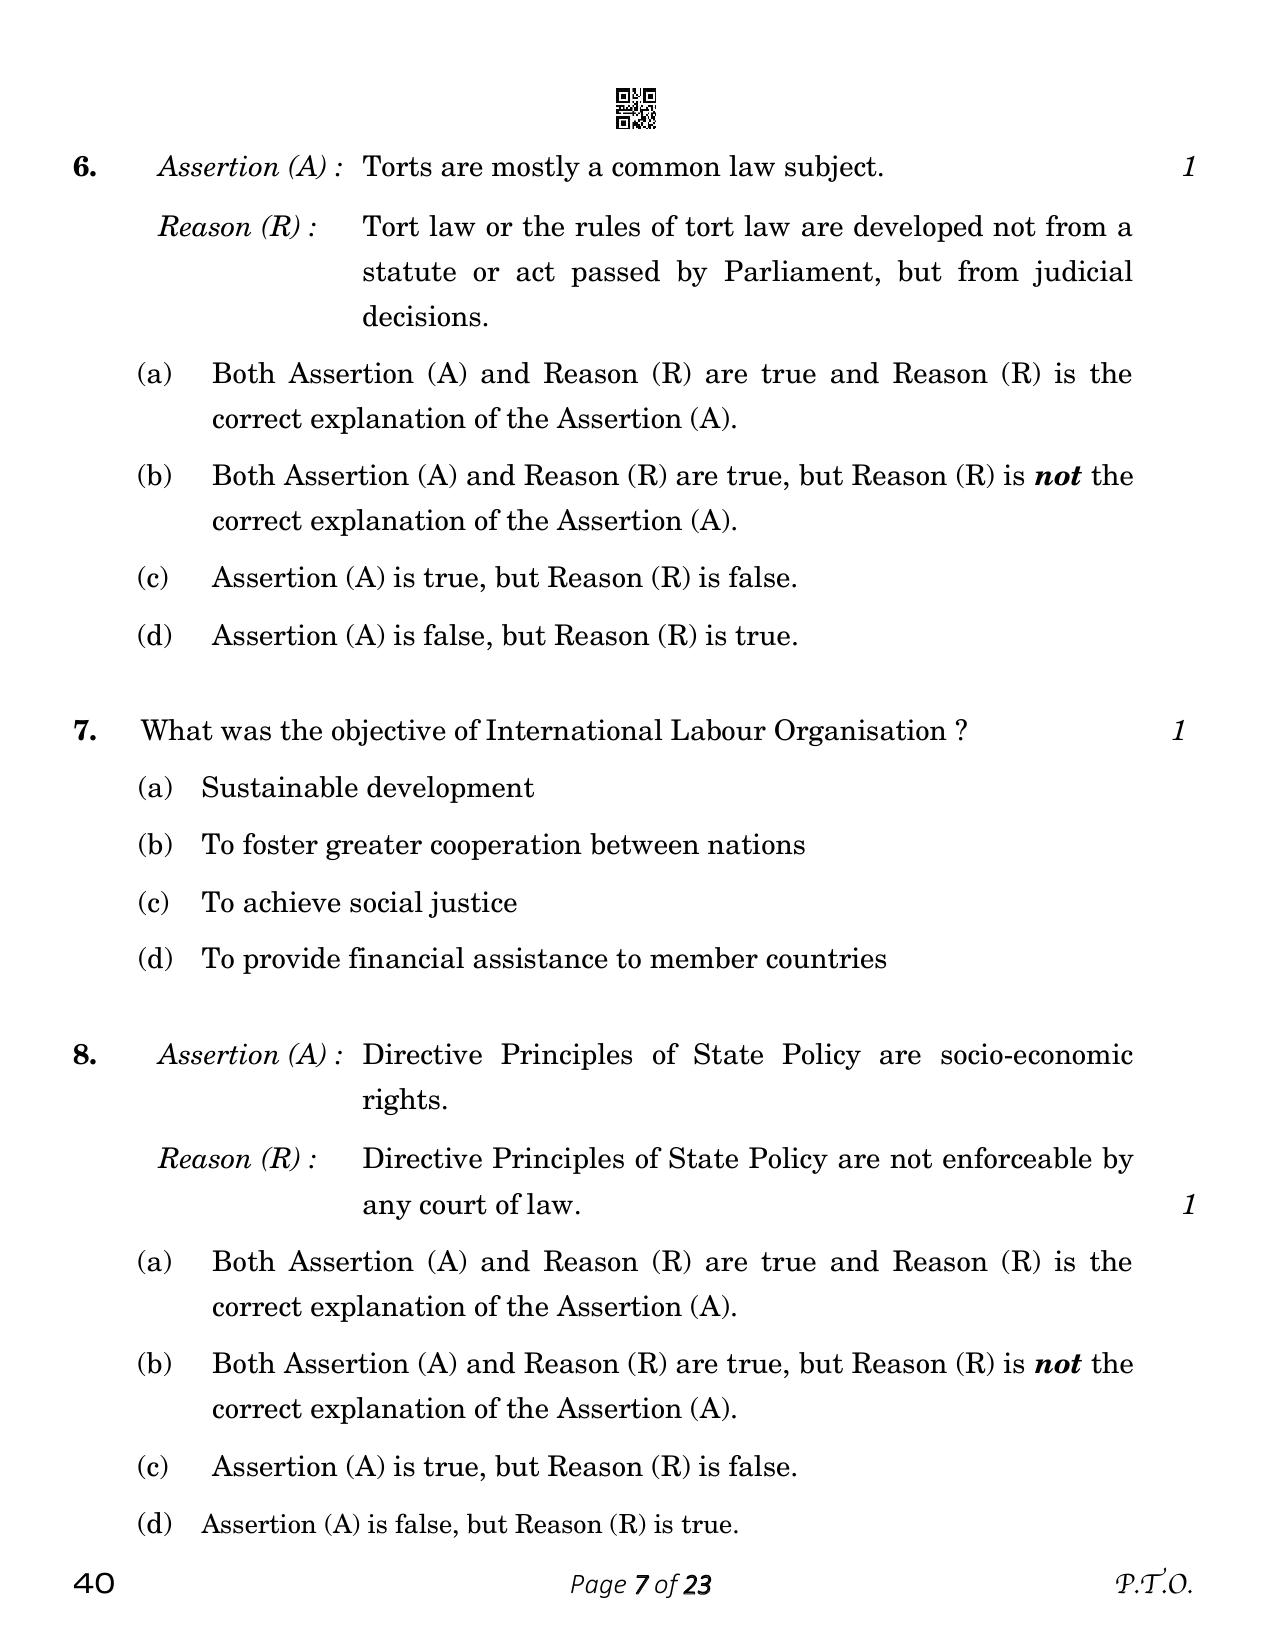 CBSE Class 12 Legal Studies (Compartment) 2023 Question Paper - Page 7